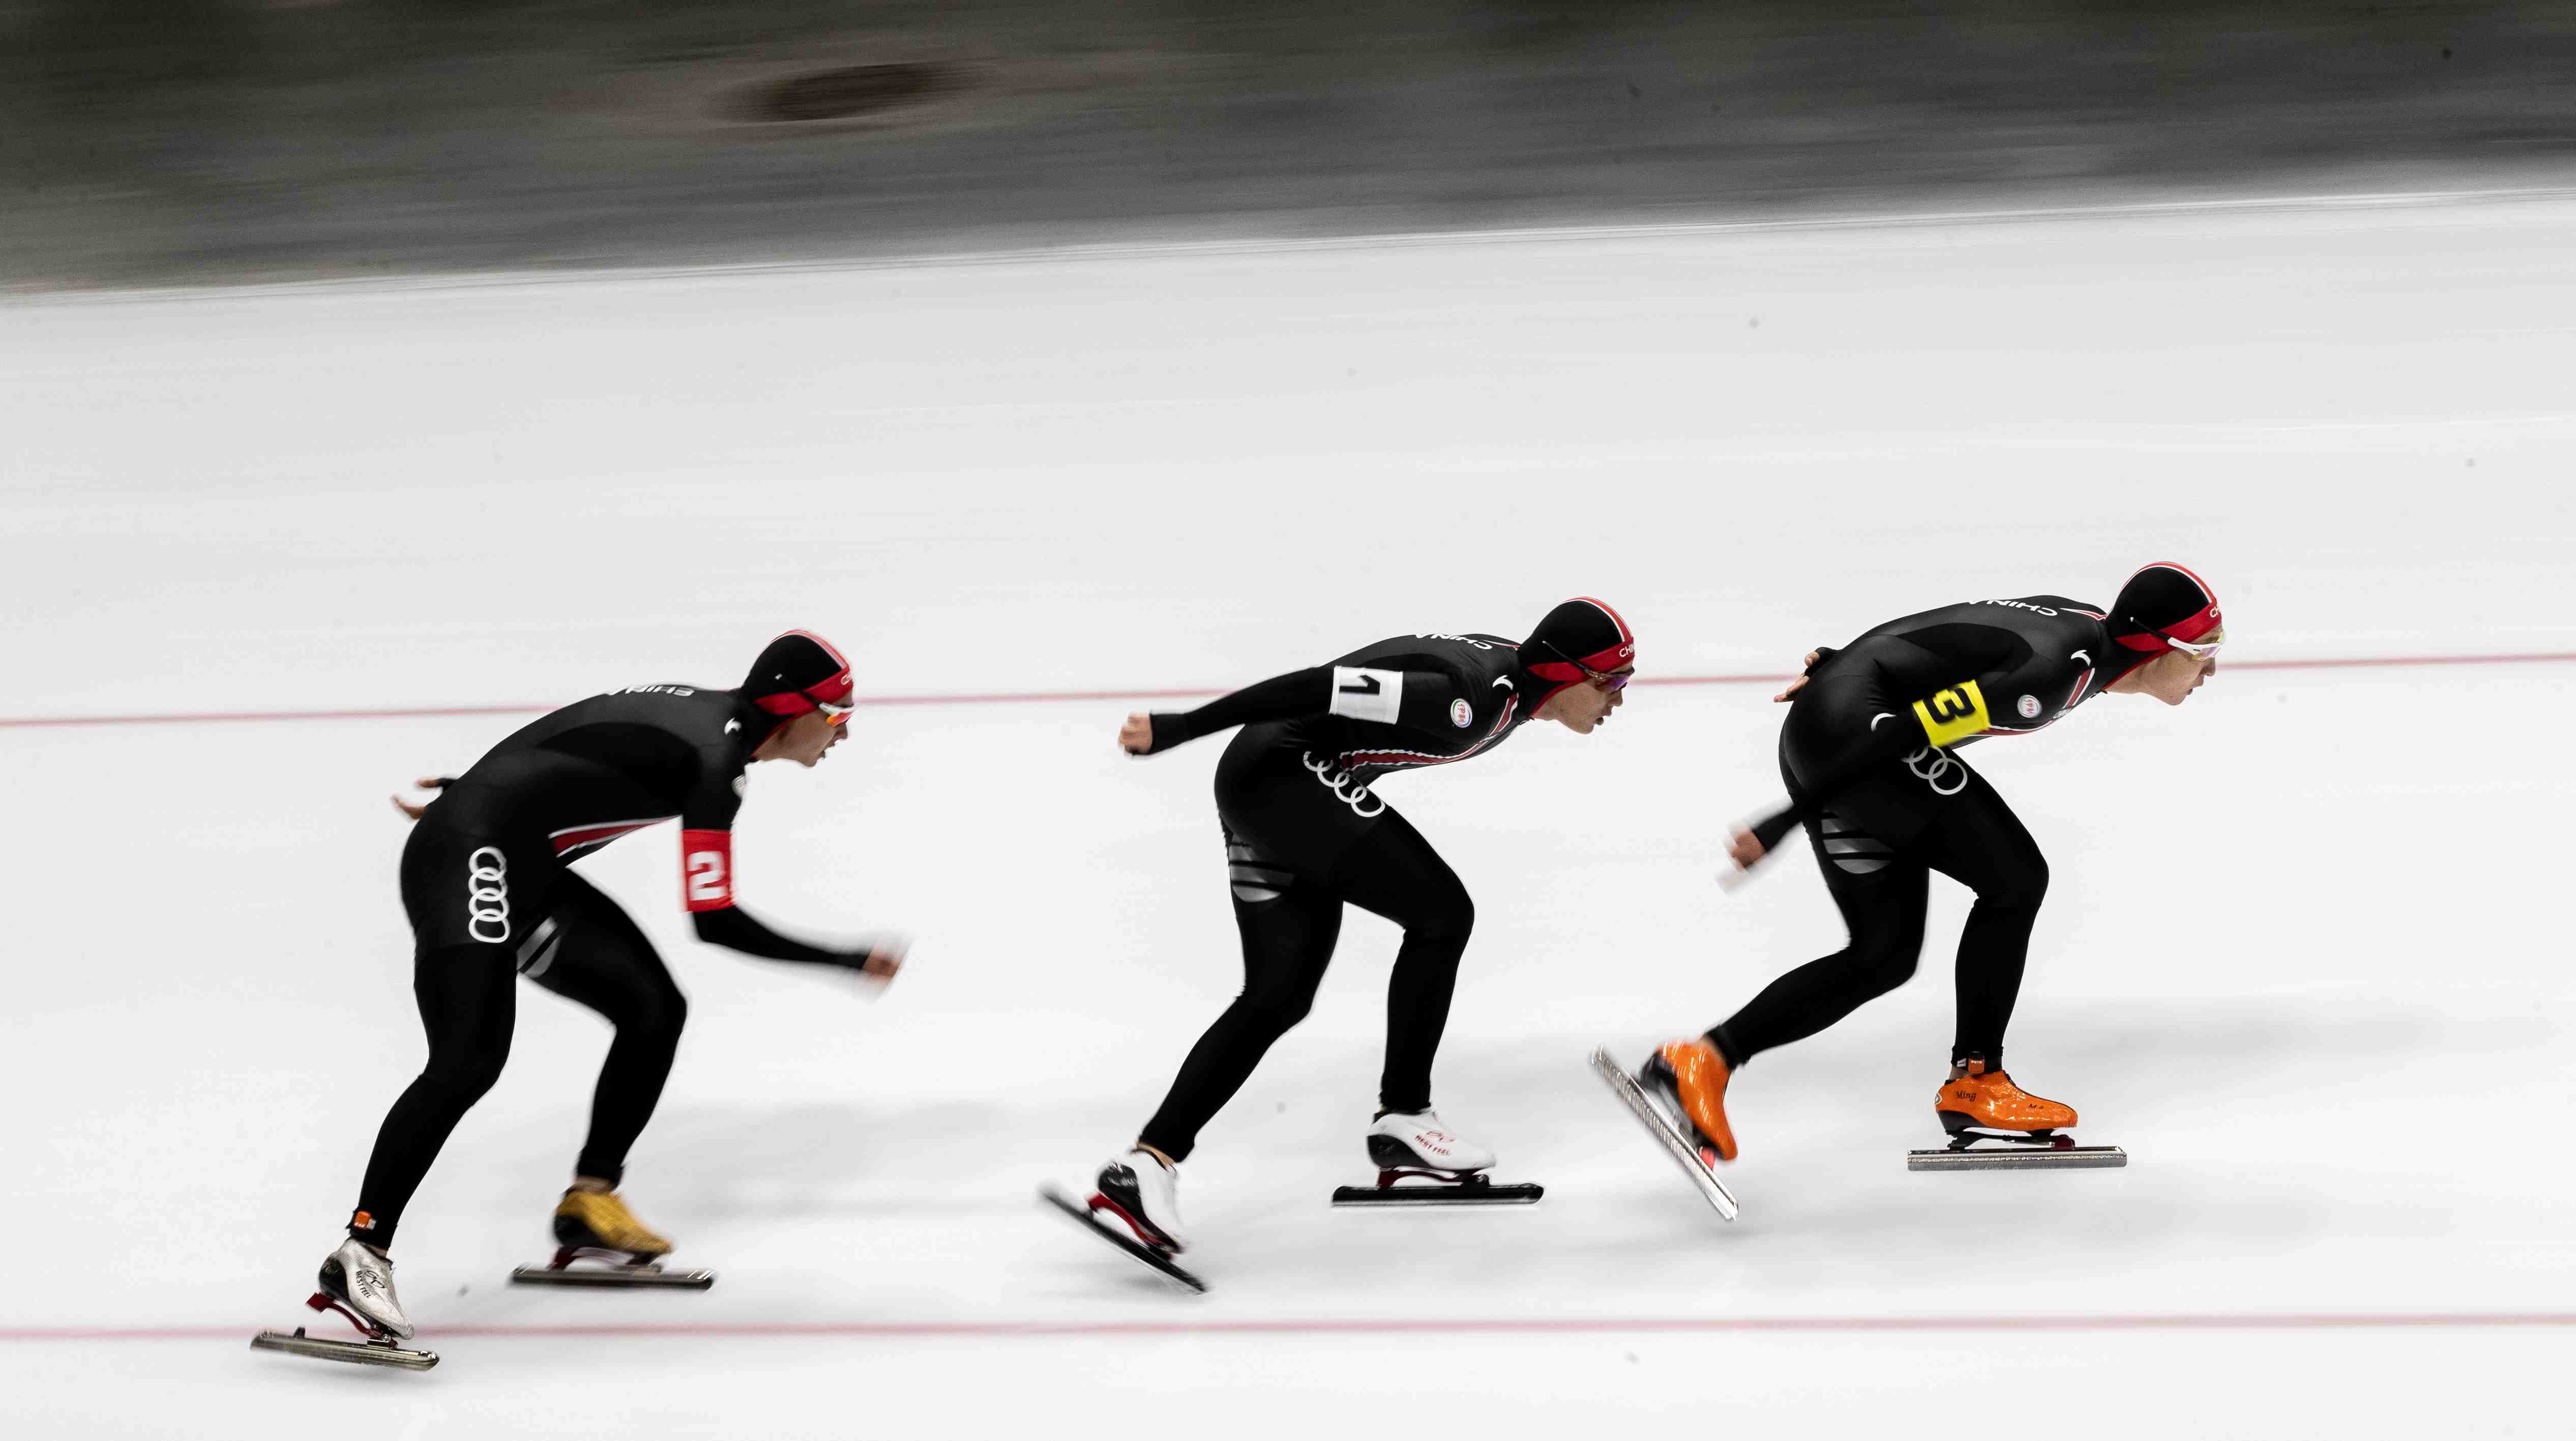 ISU releases 2019-20 speed skating schedule - CGTN